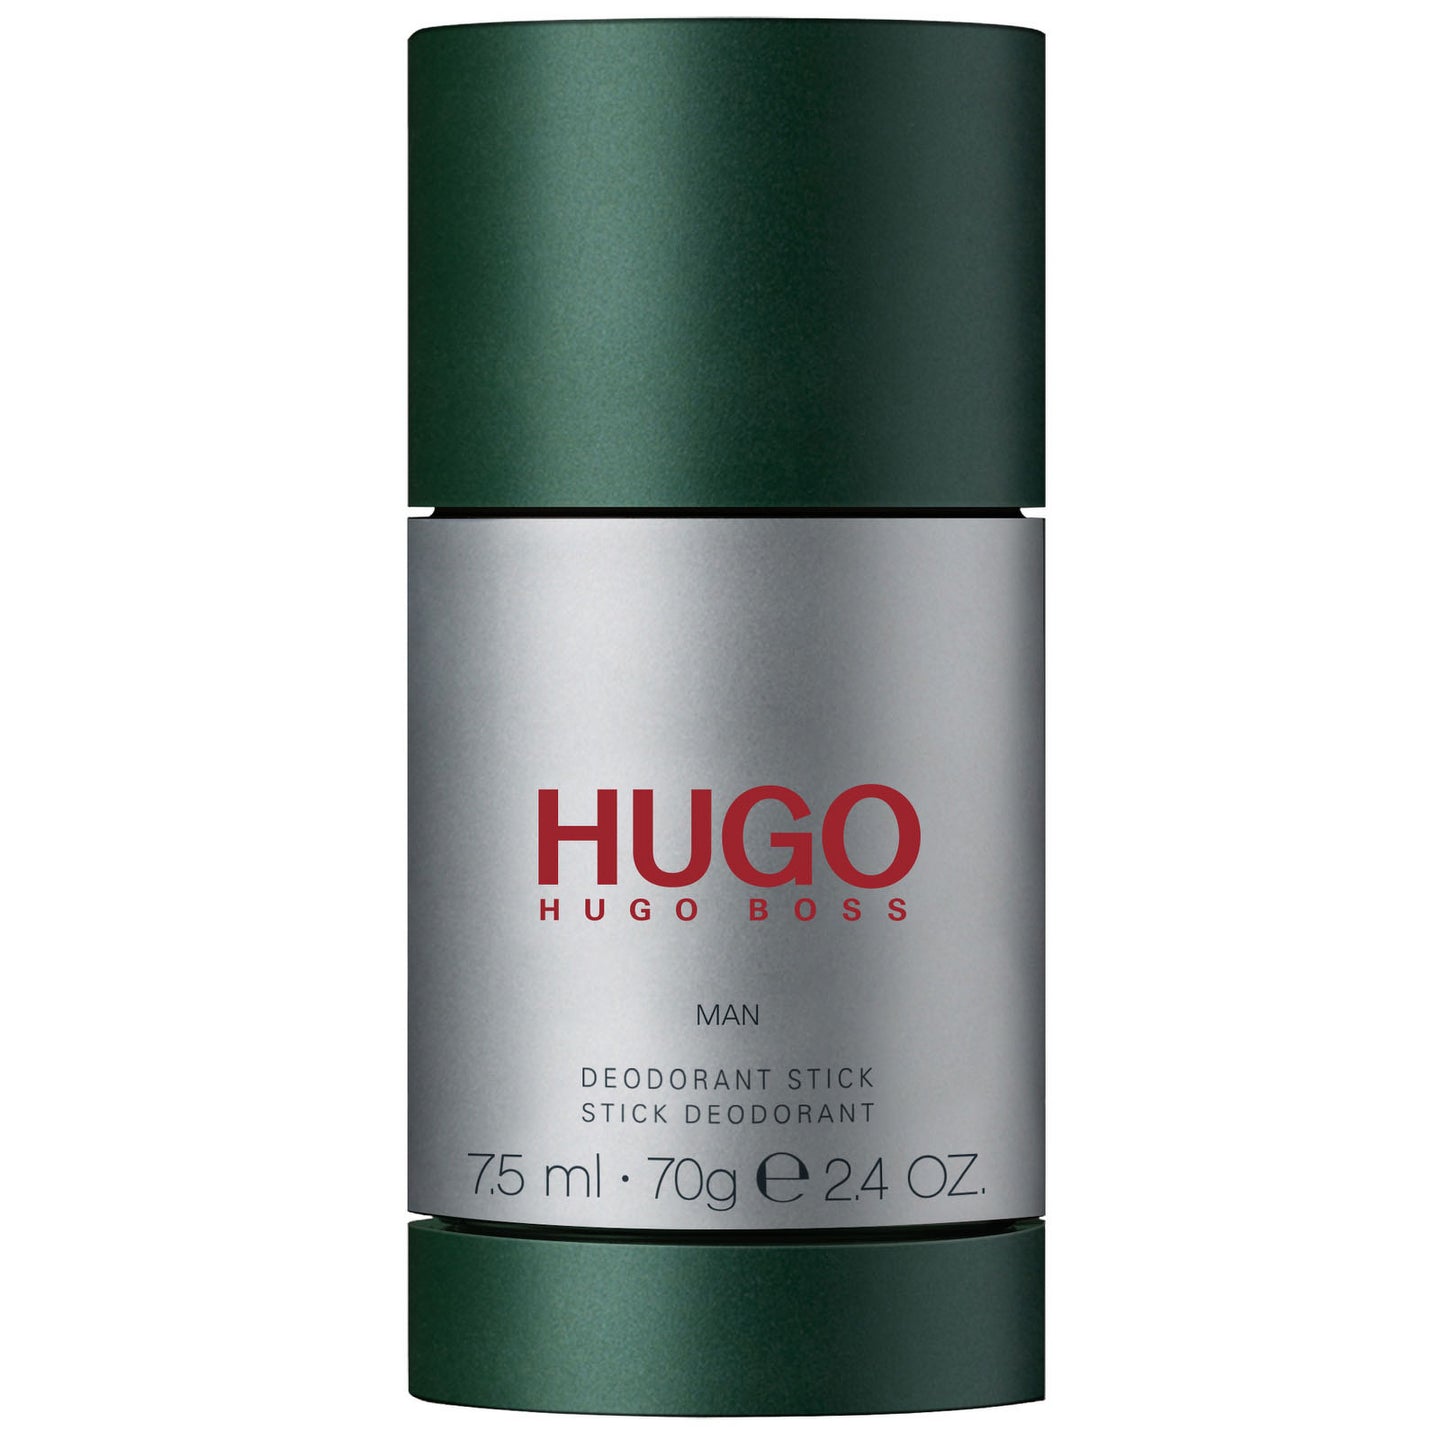 HUGO Man Deodorant Stick (75ml / 70g / 2.4oz)